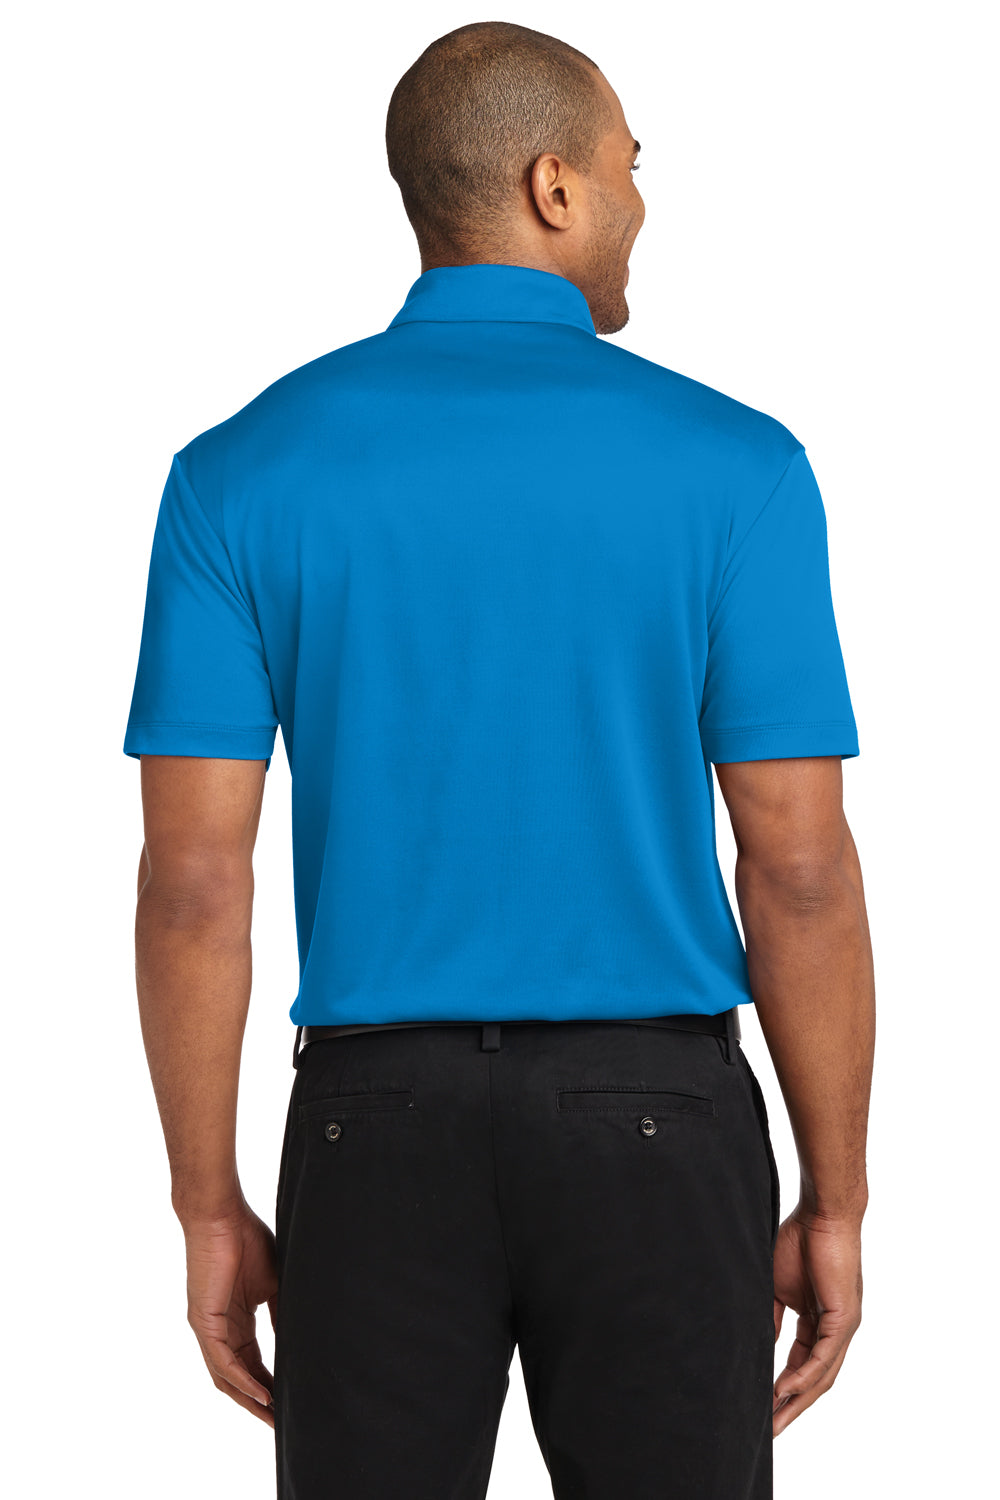 Port Authority K540P Mens Silk Touch Performance Moisture Wicking Short Sleeve Polo Shirt w/ Pocket Brilliant Blue Back